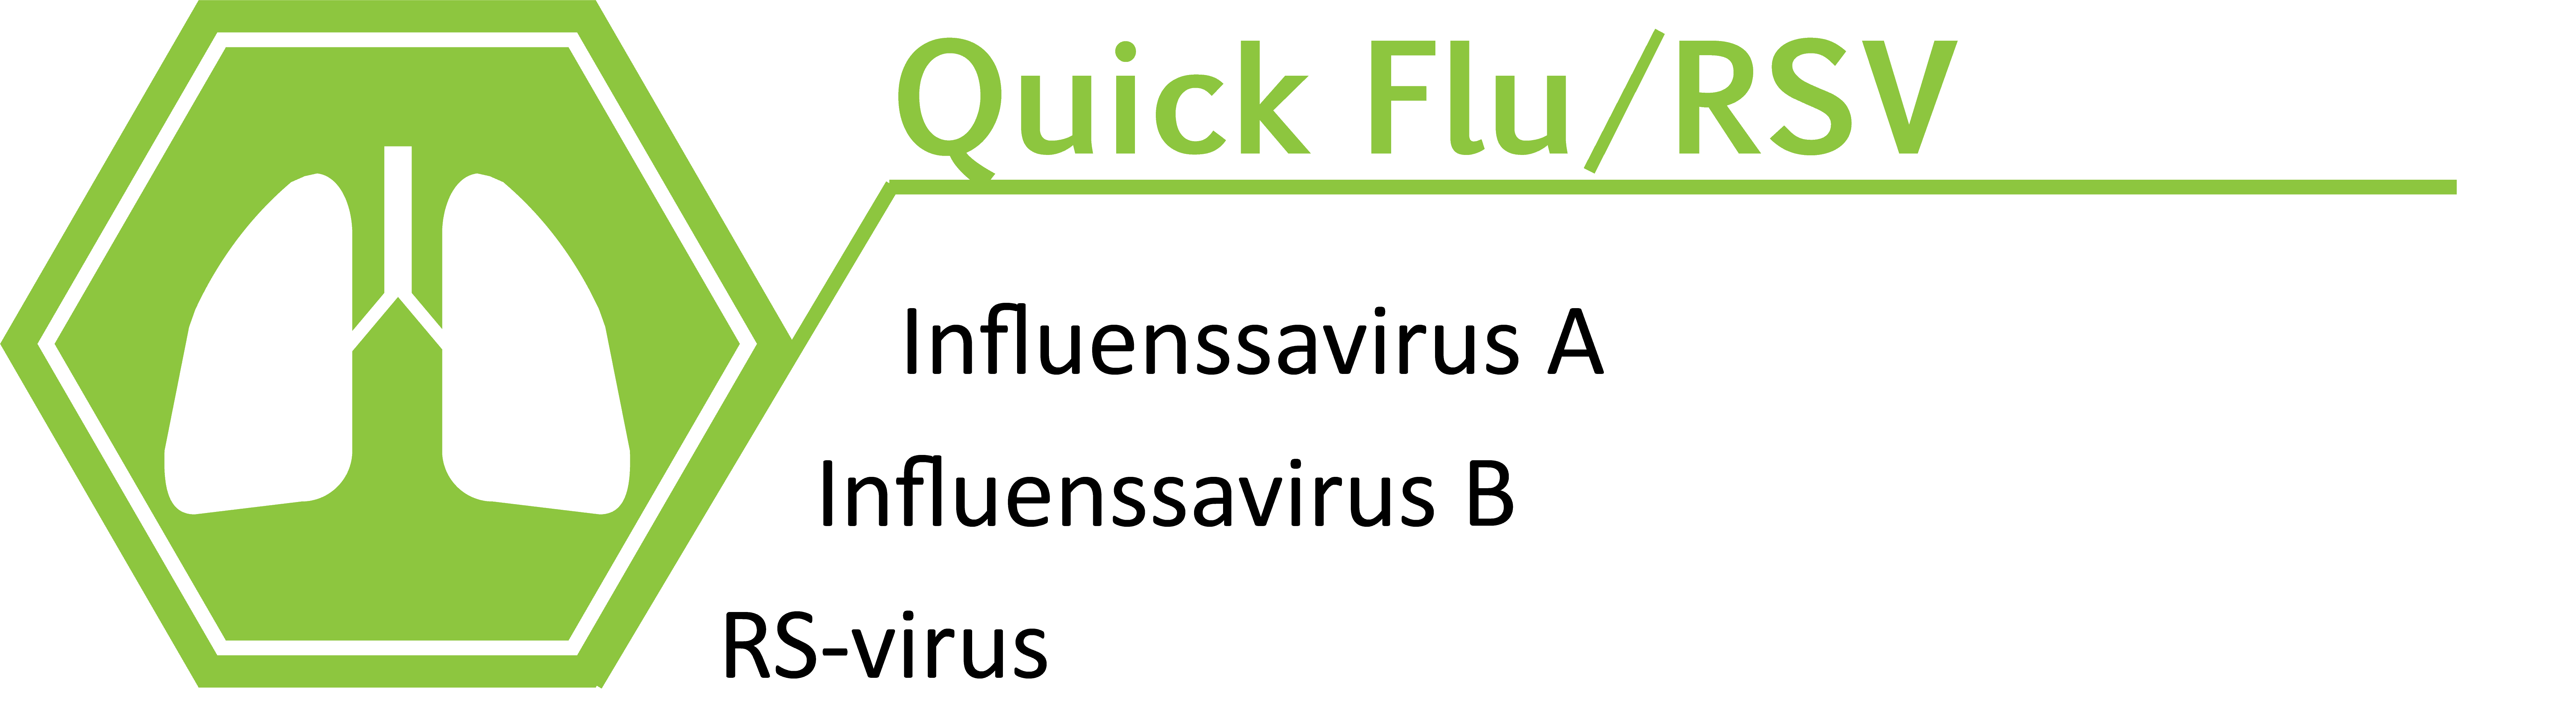 Quick Flu/RSV influenssapikatesti - mariPOC